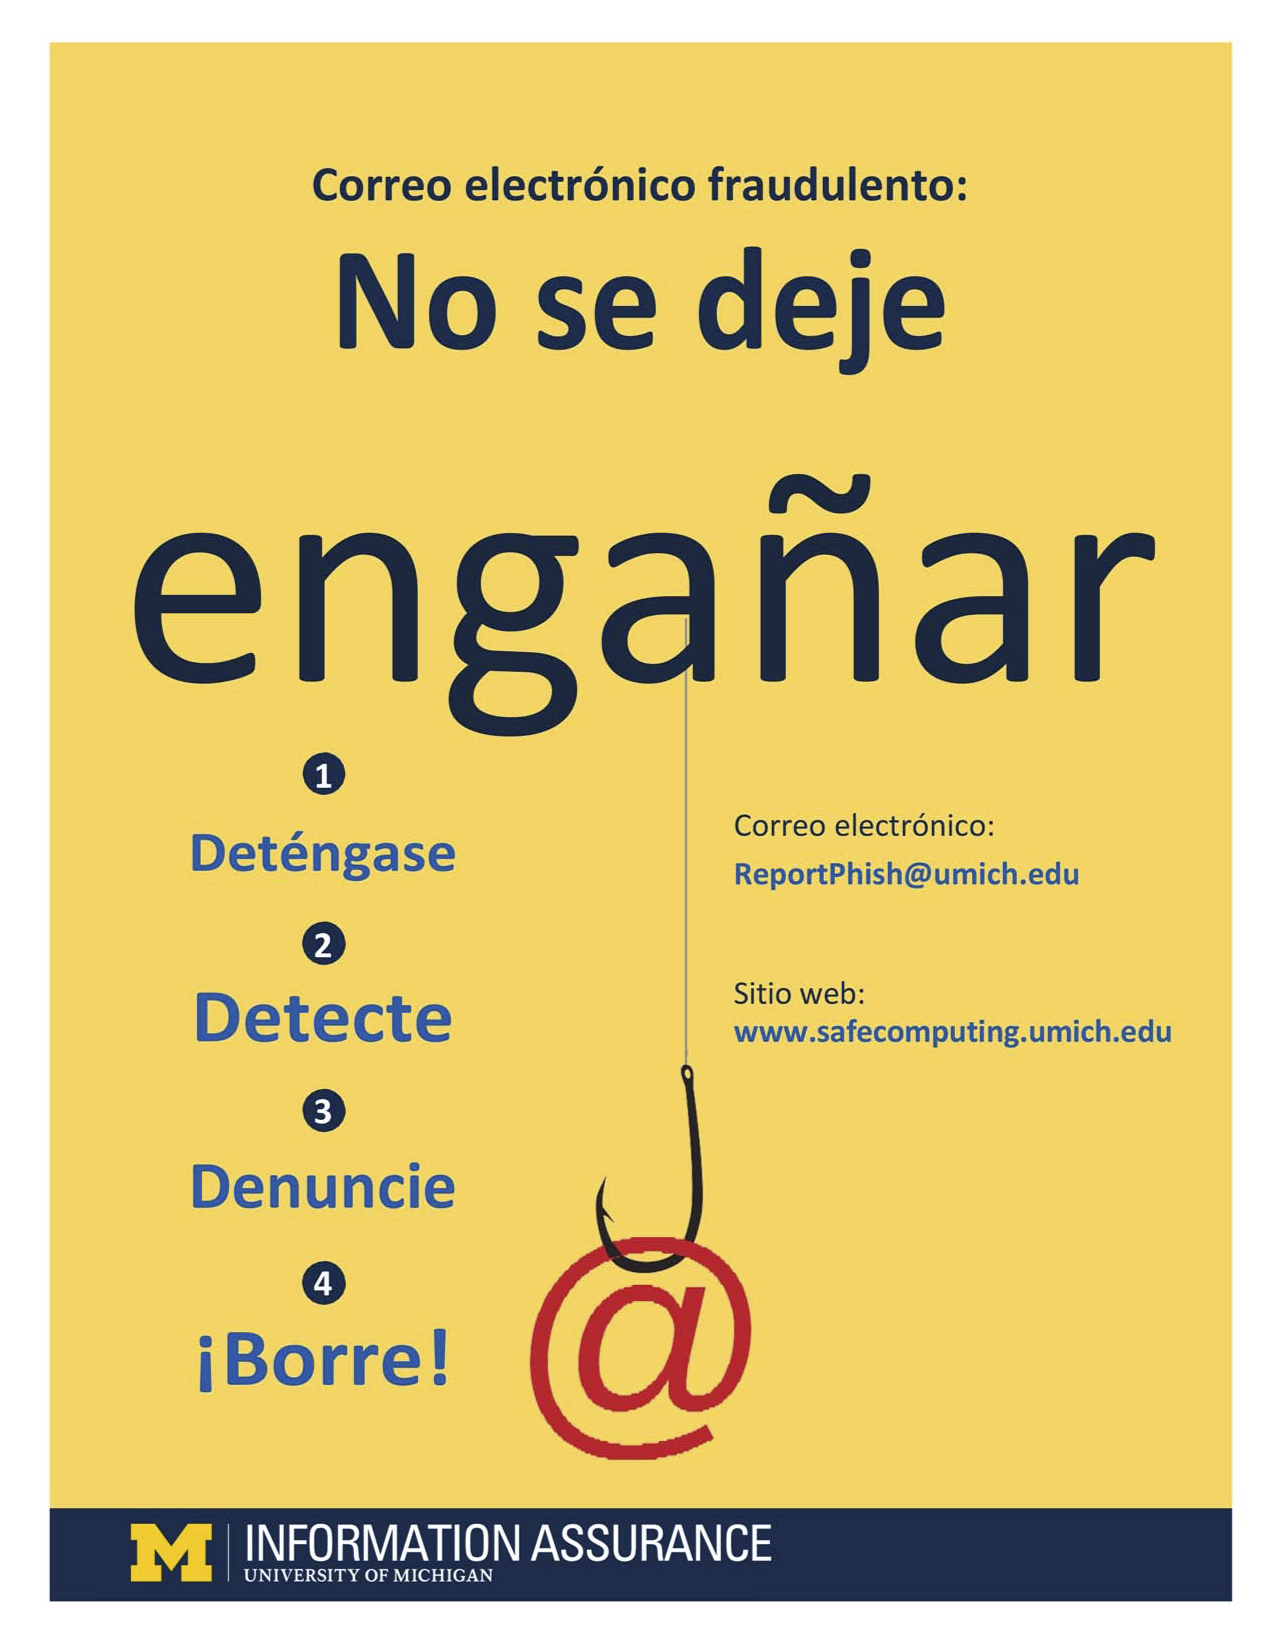 Image of the anti-phishing poster in Spanish.